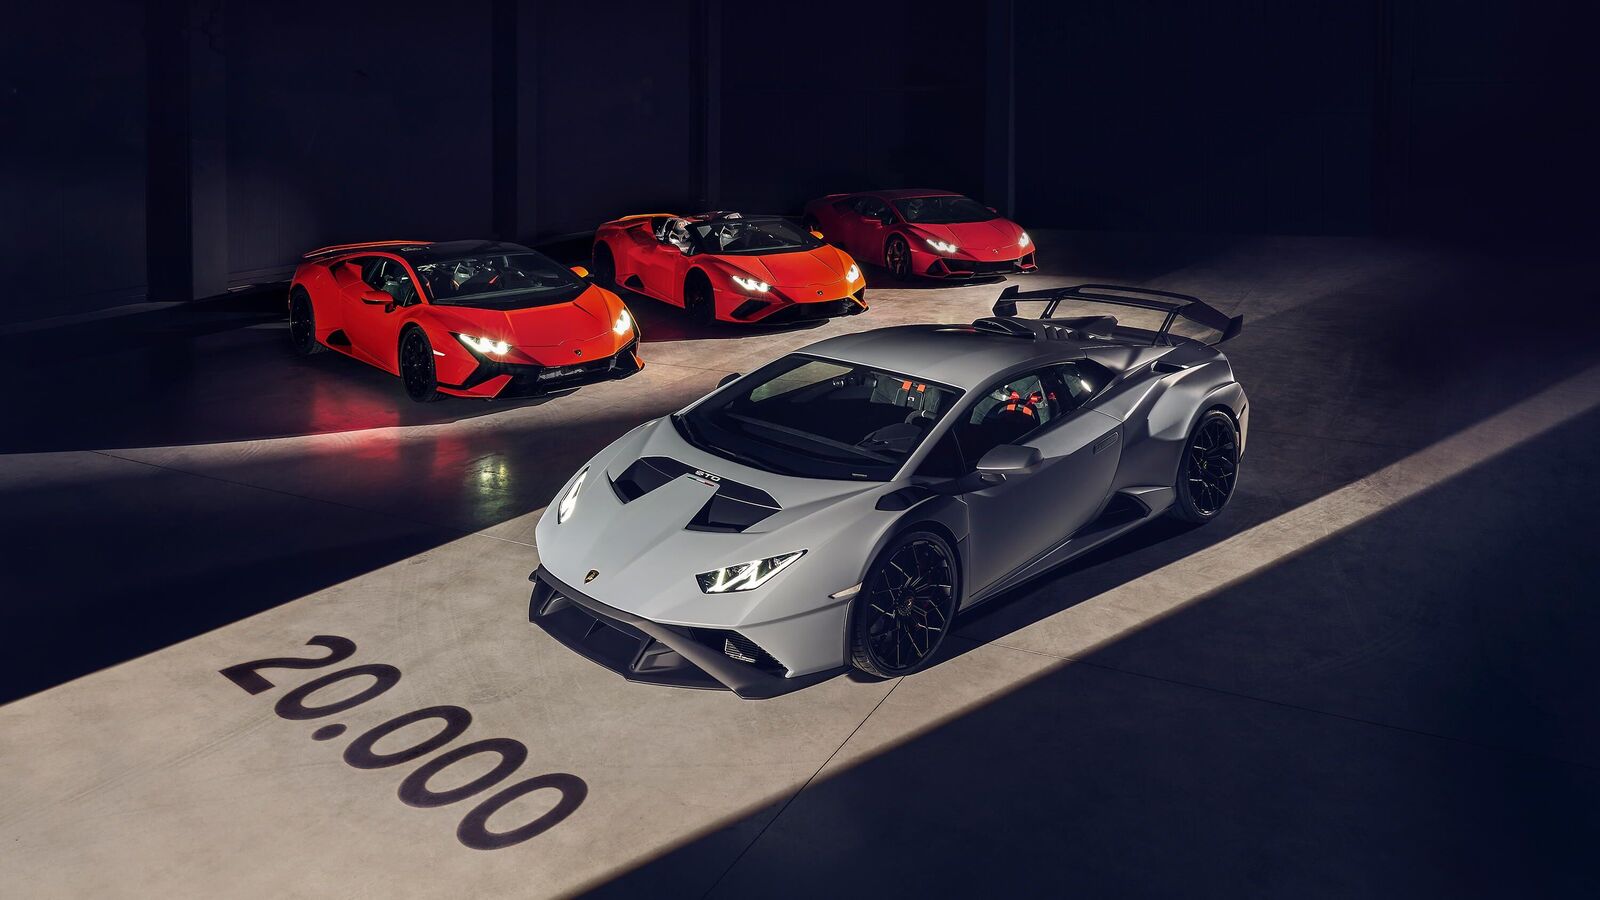 Lamborghini Huracan achieves production milestone of 20,000 units